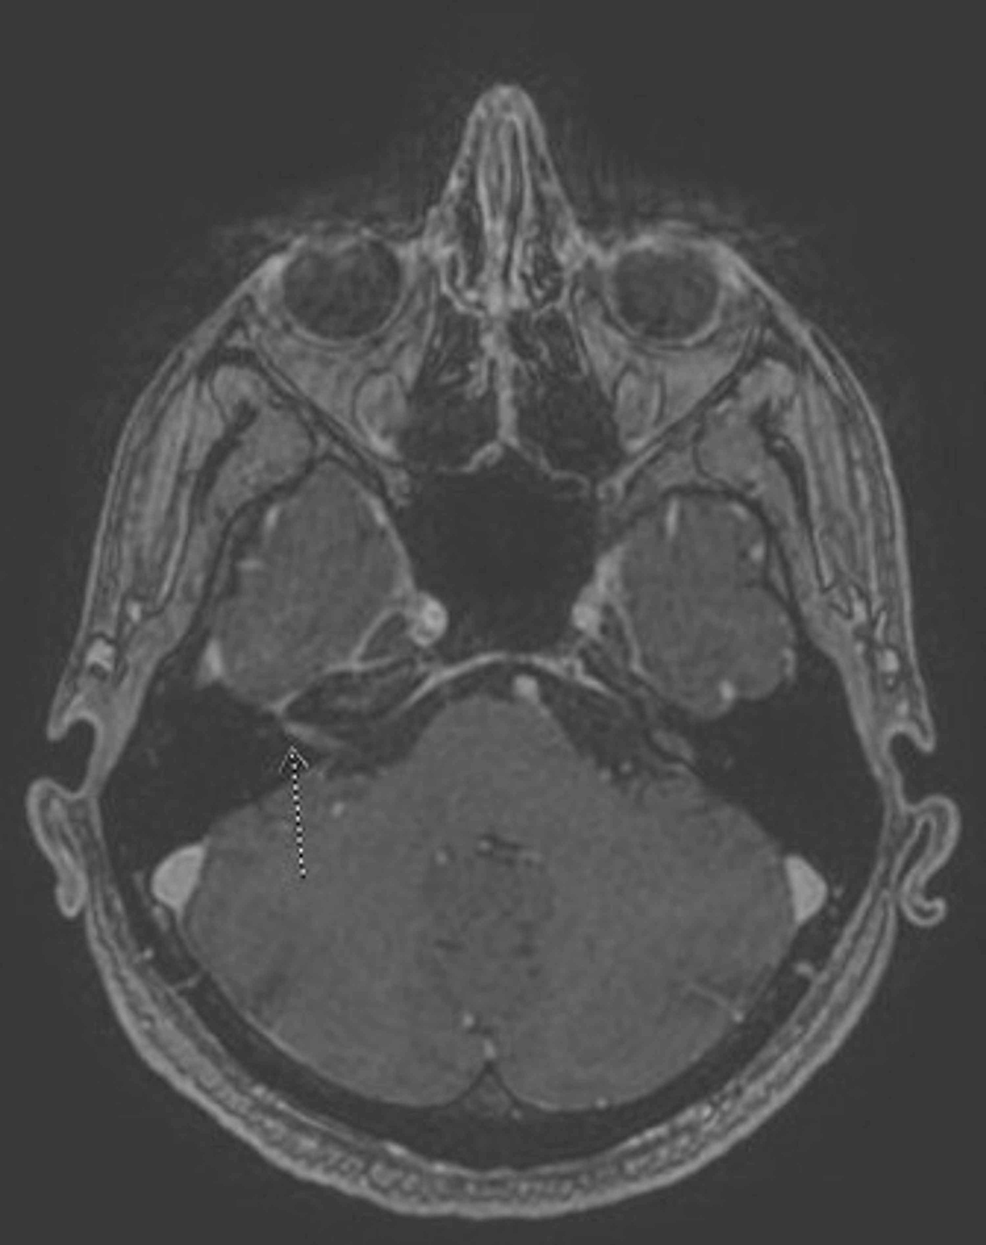 Magnetic-resonance-imaging-(MRI)-of-the-brain